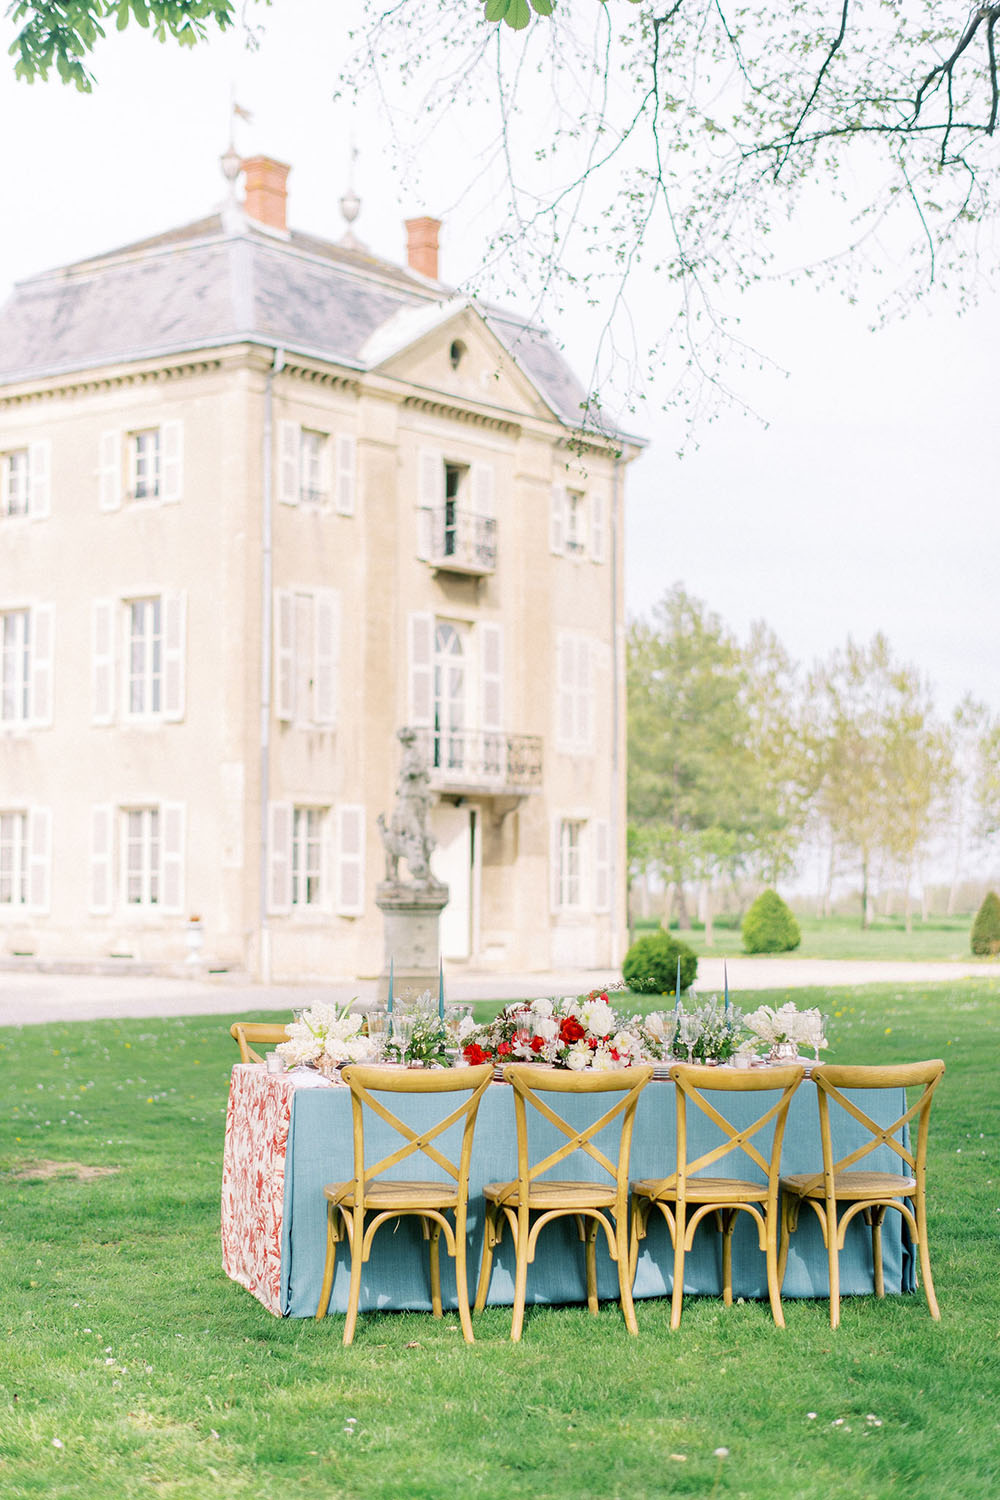 Loire Valley Chateau Wedding Red Wedding Dress